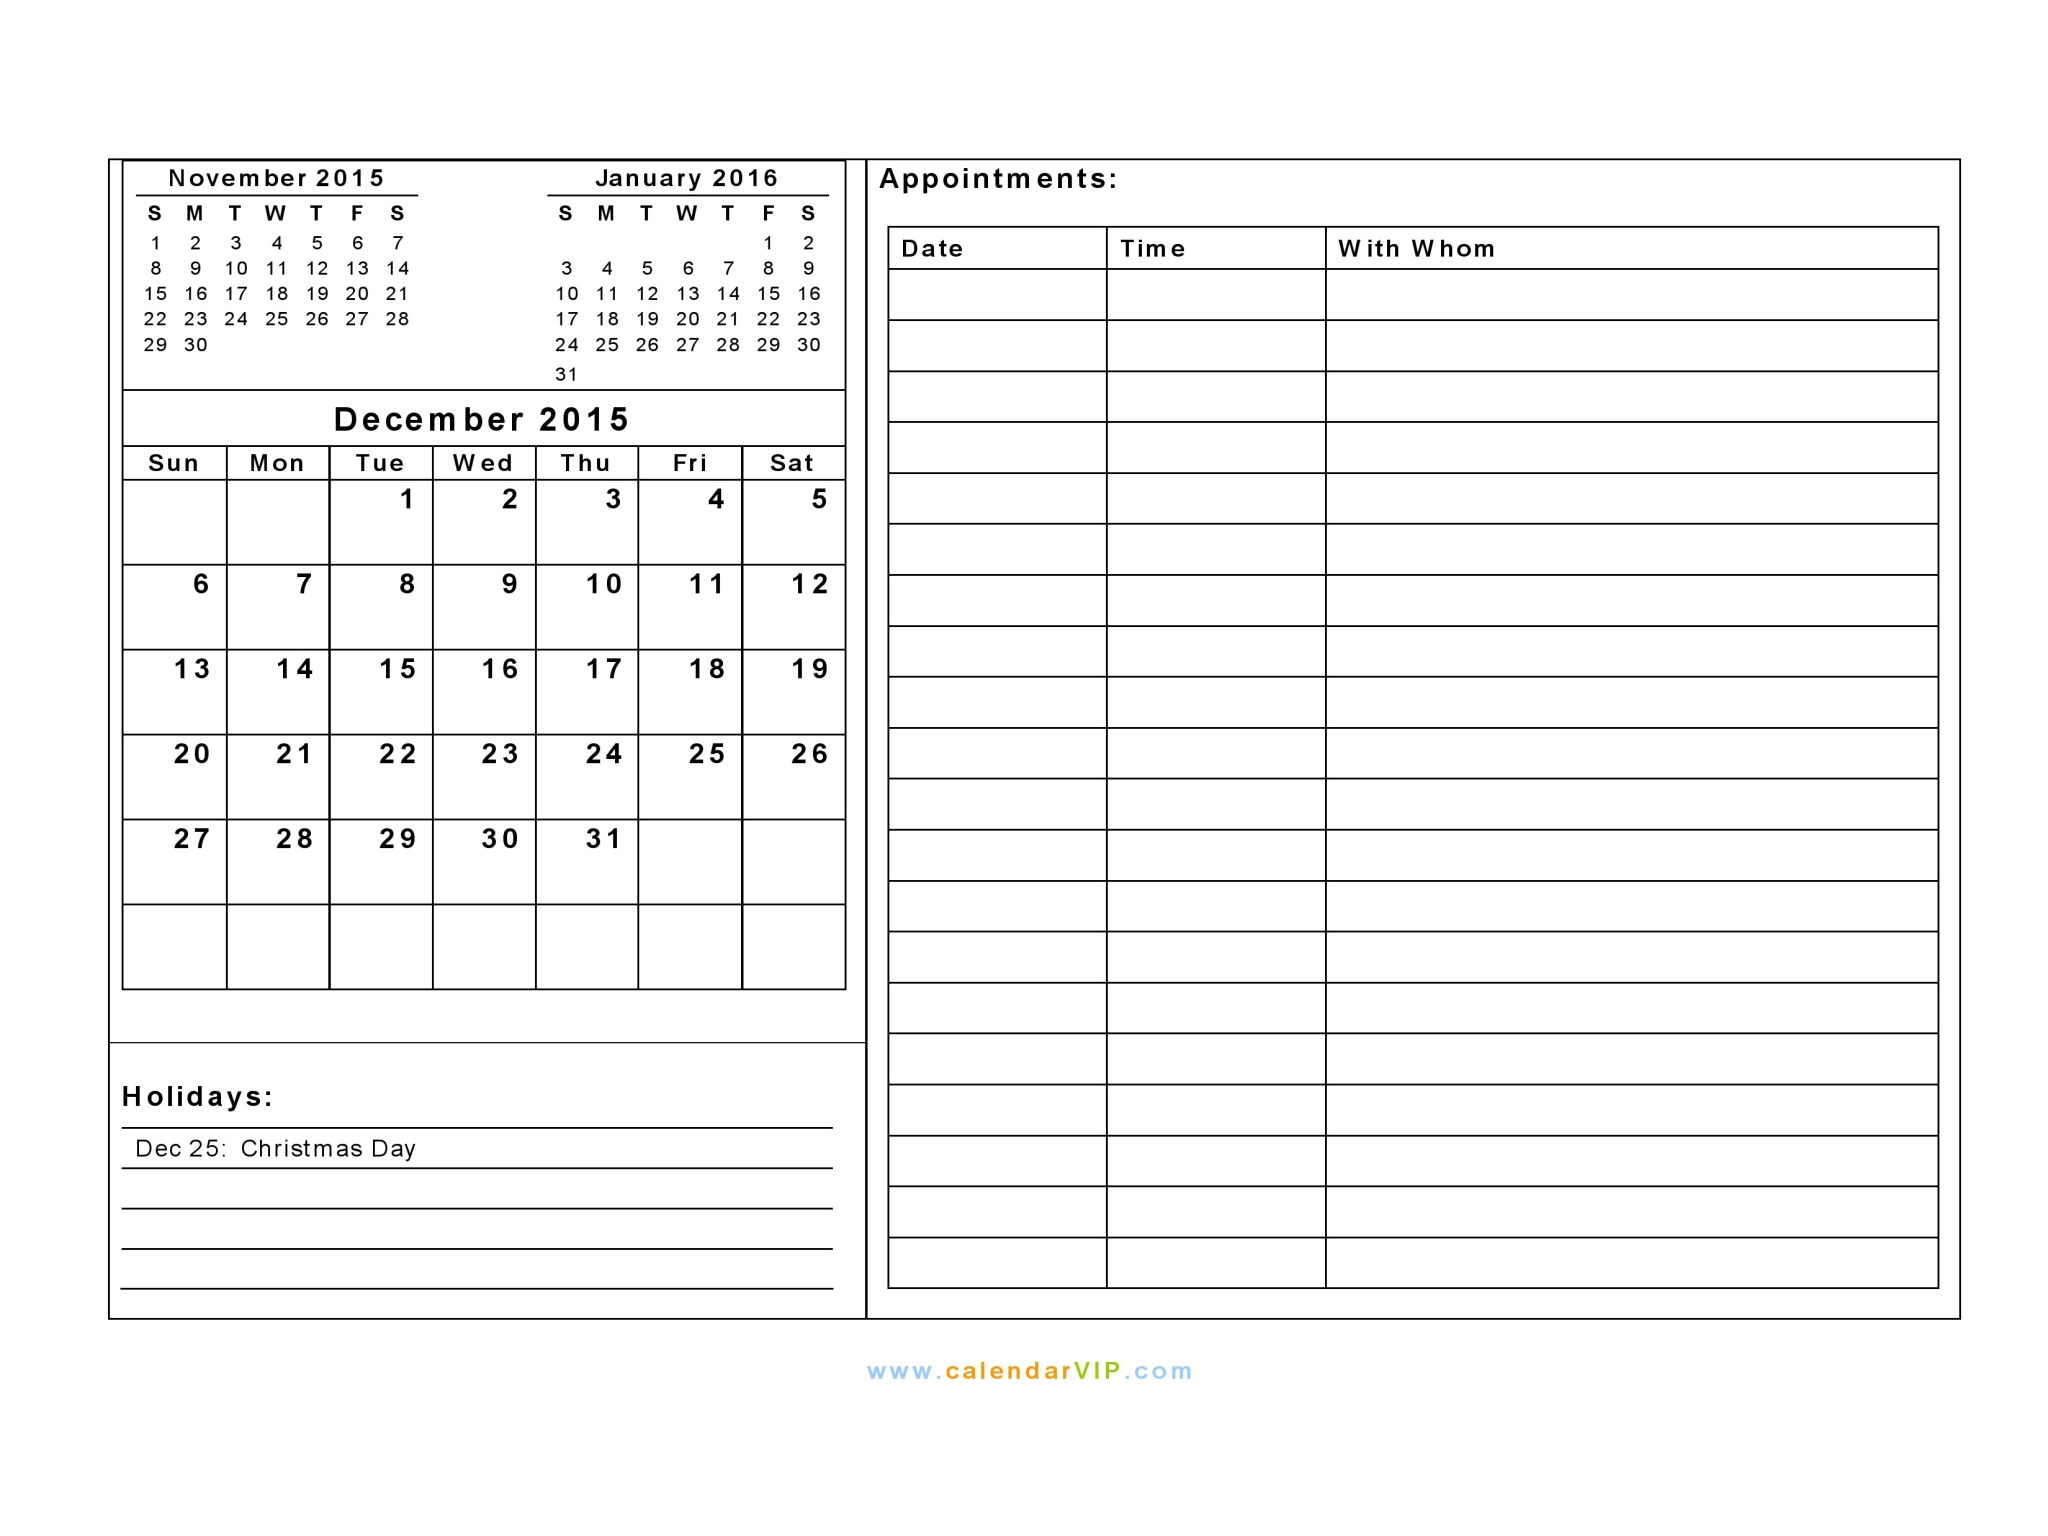 December 2015 Calendar Blank Printable Calendar Template in PDF Word